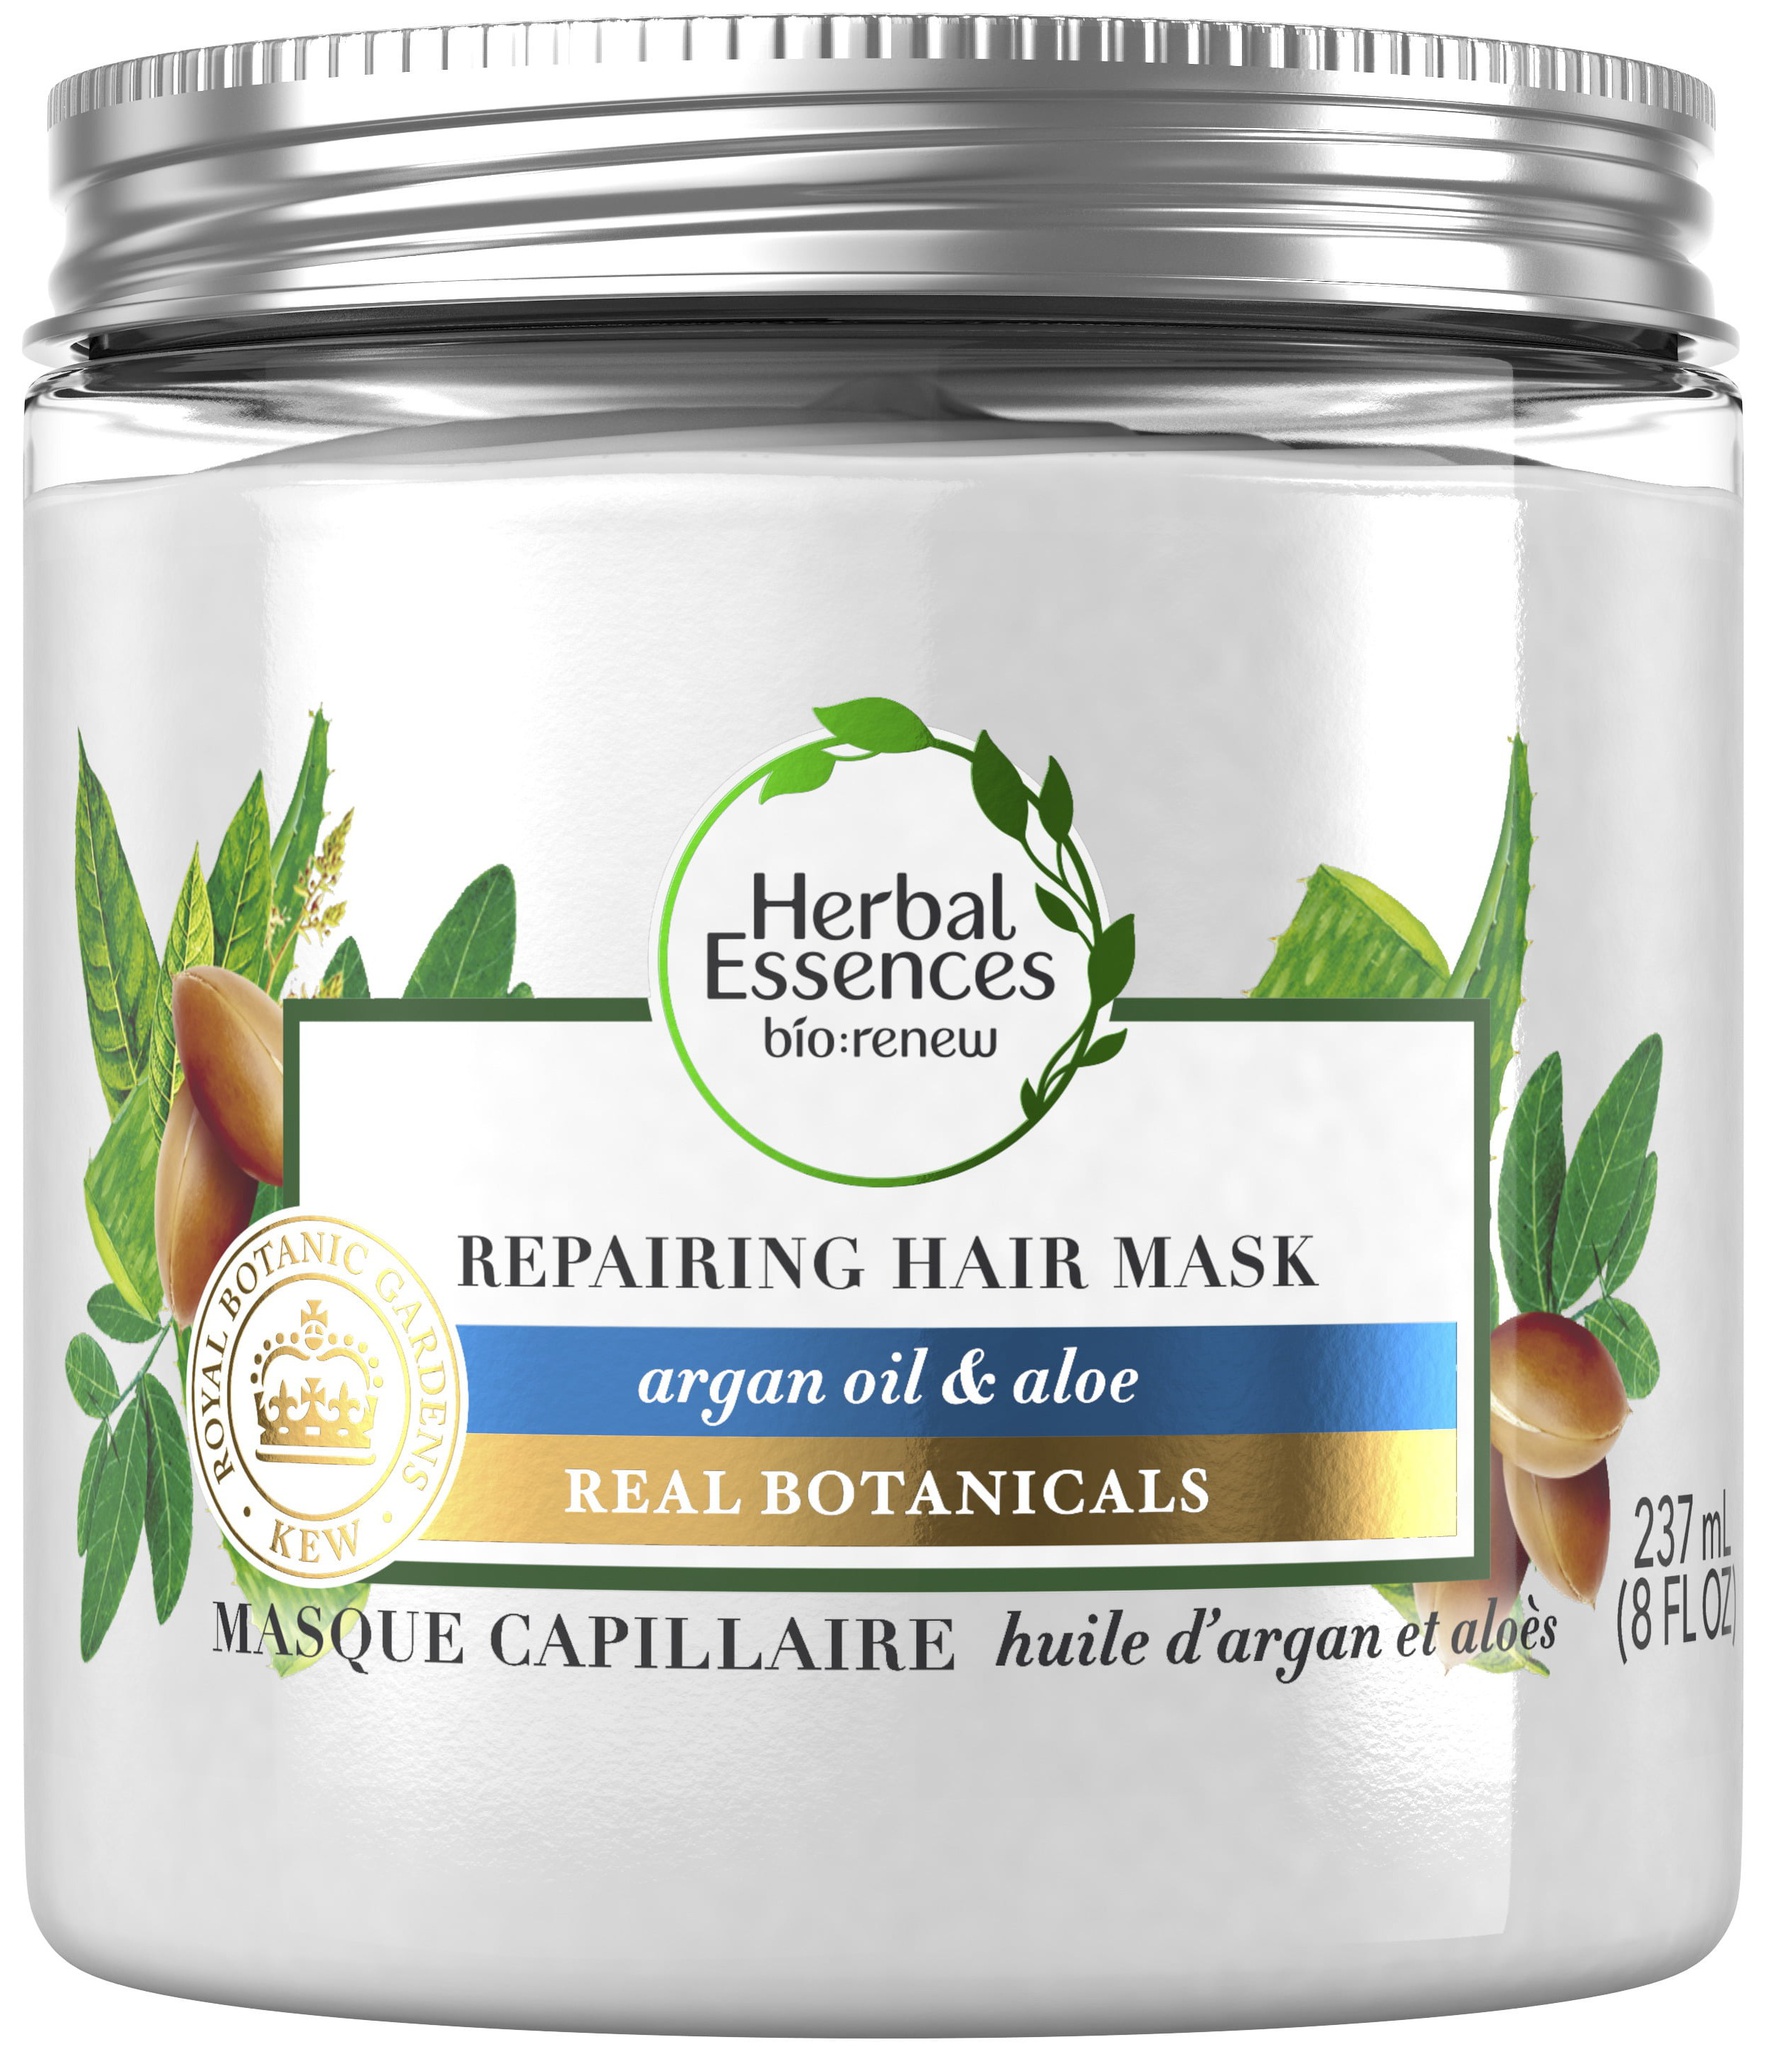 Herbal Essences Argon Oil And Aloe Hair Mask